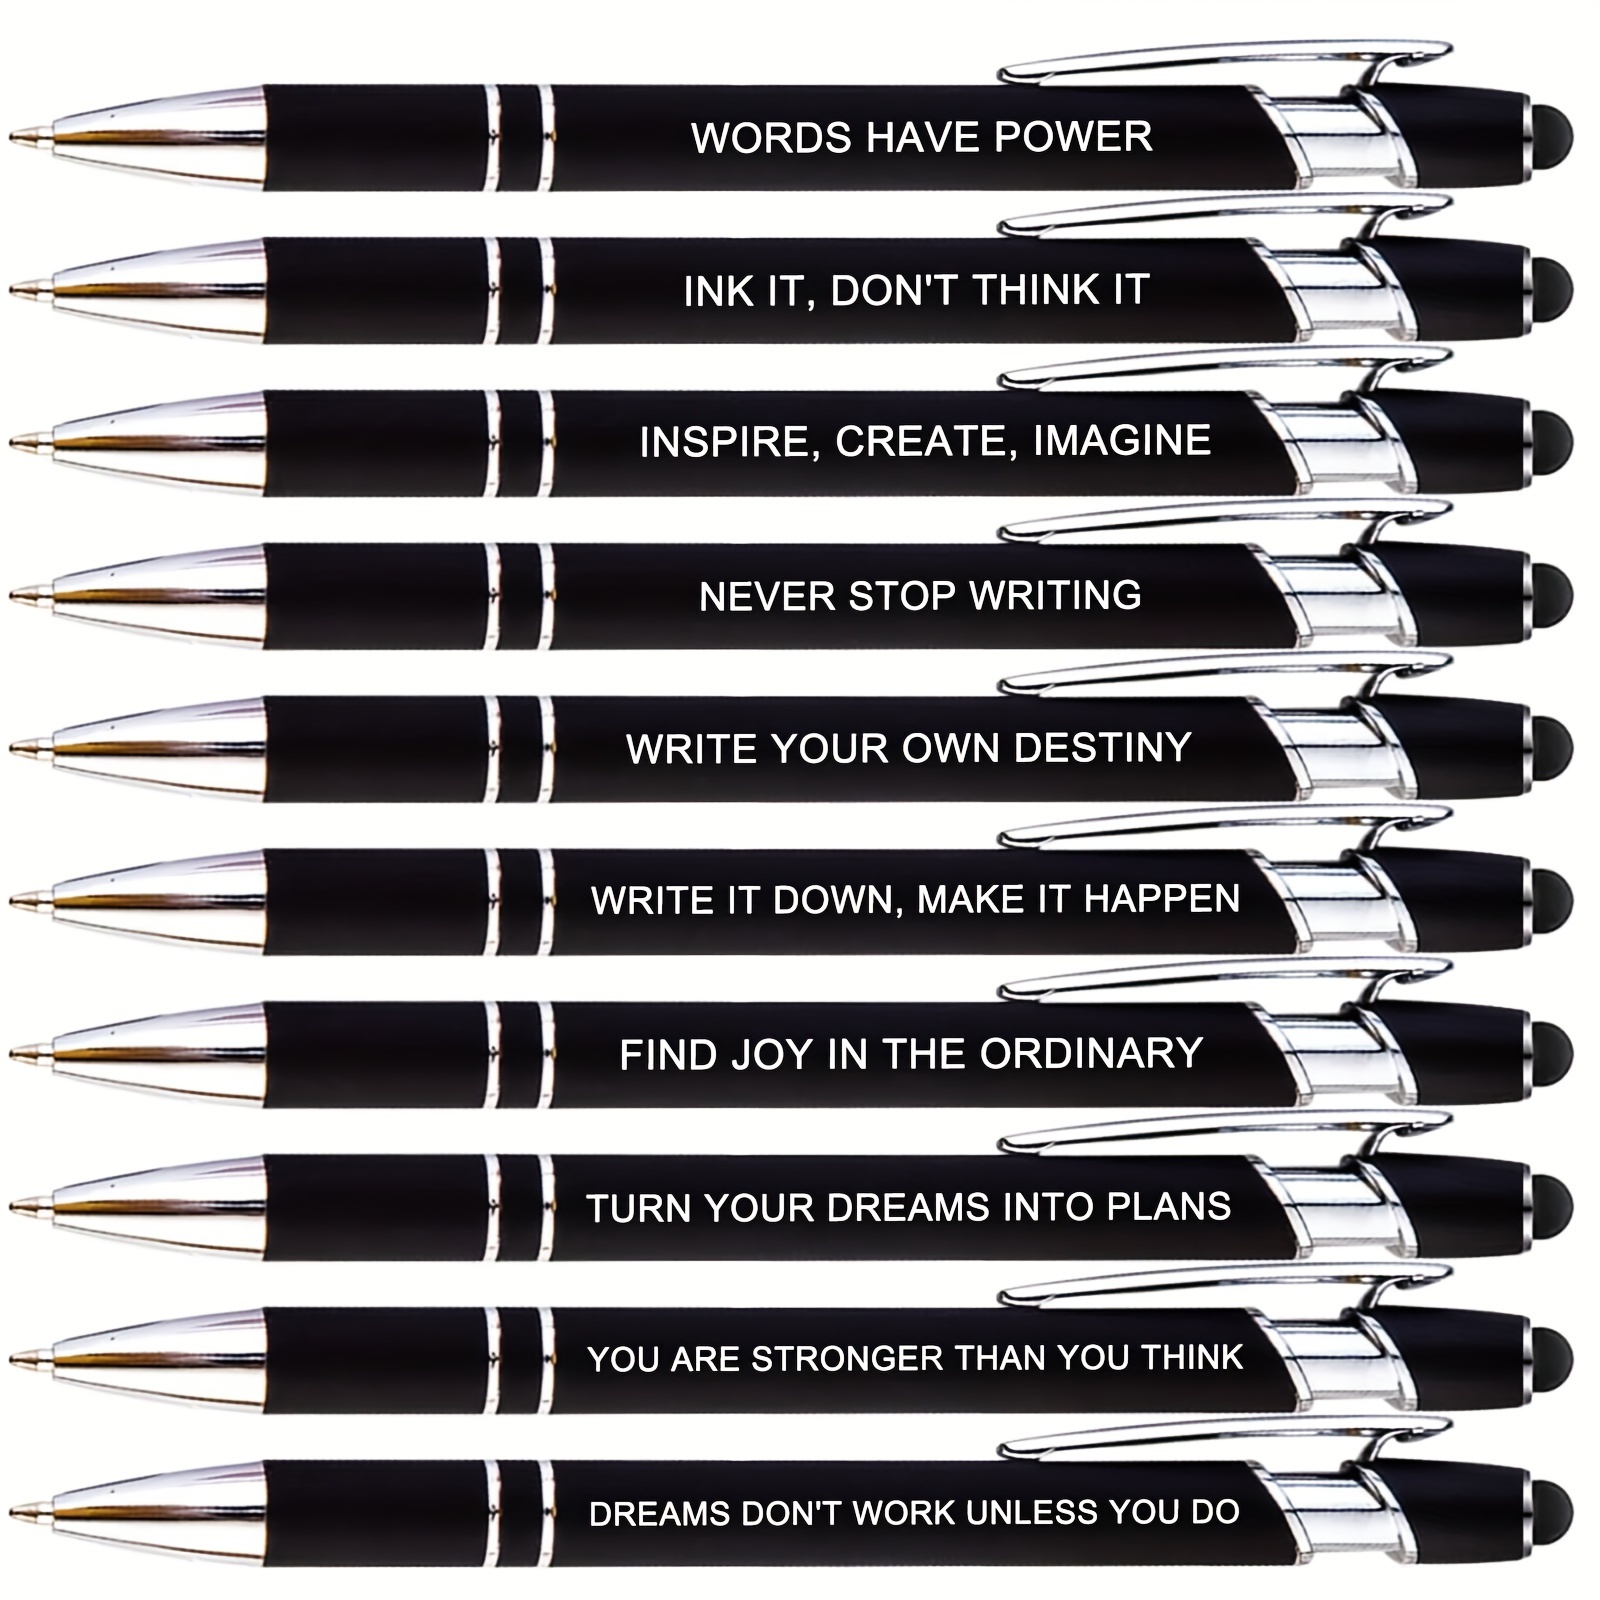 Teachers Pen Set, Funny Gifts